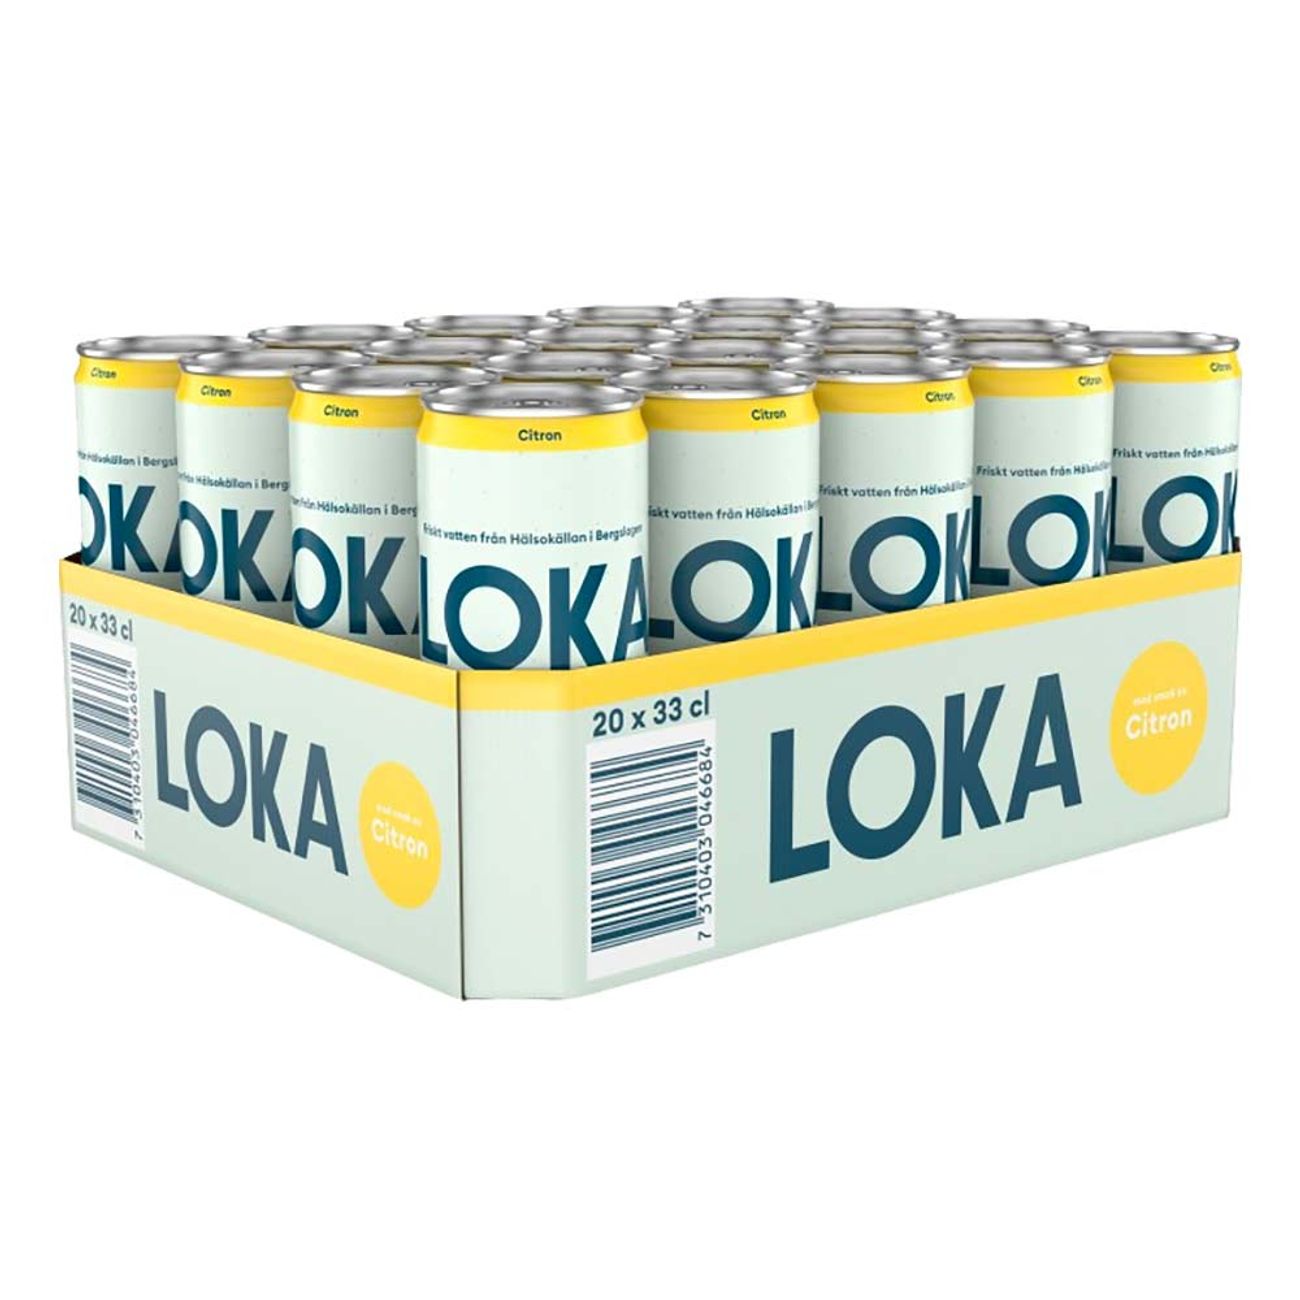 loka-citron-84098-2